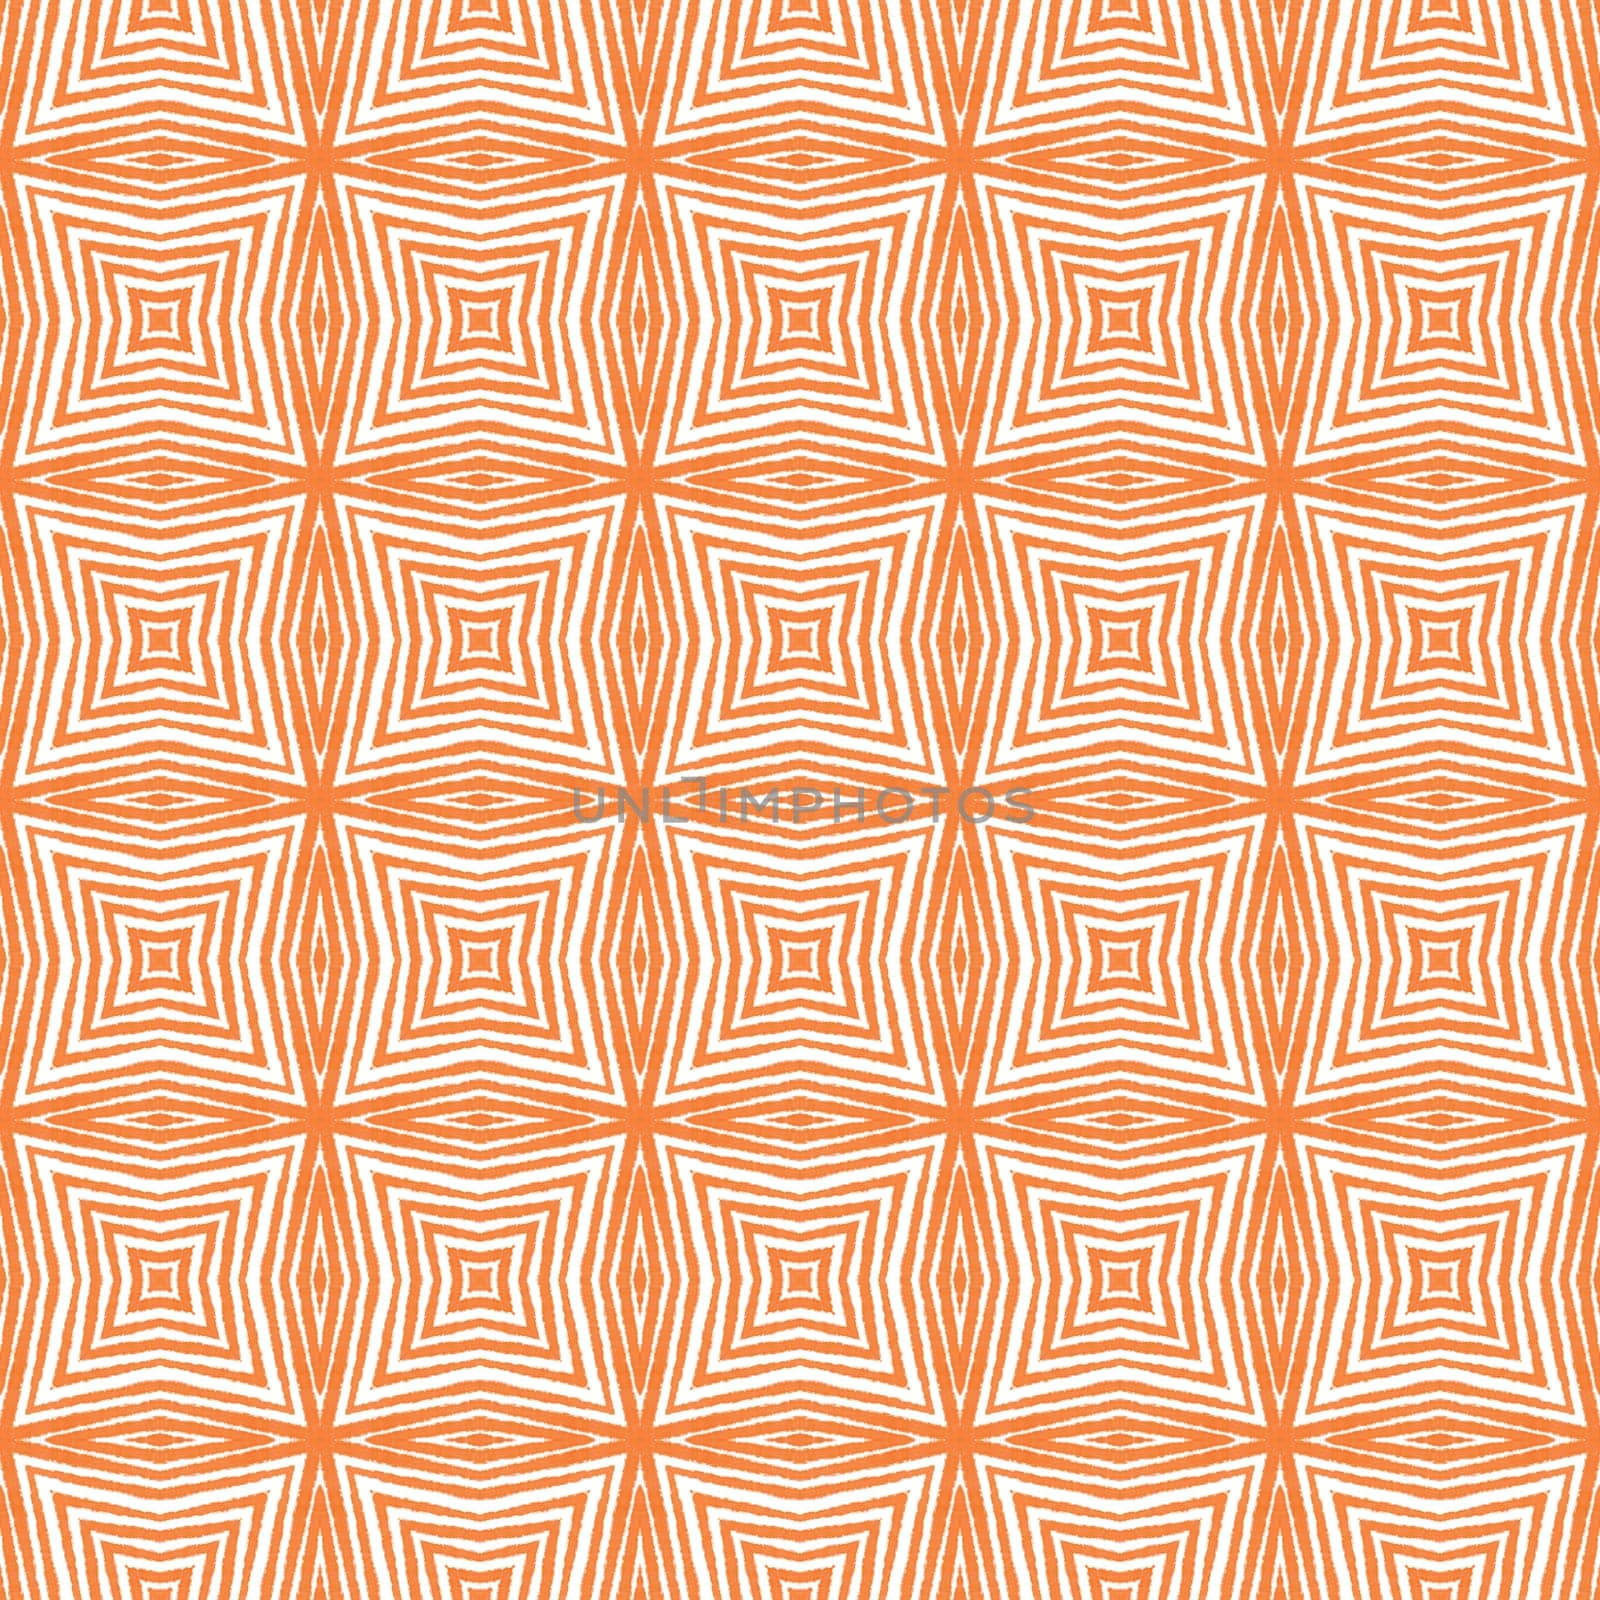 Textured stripes pattern. Orange symmetrical by beginagain